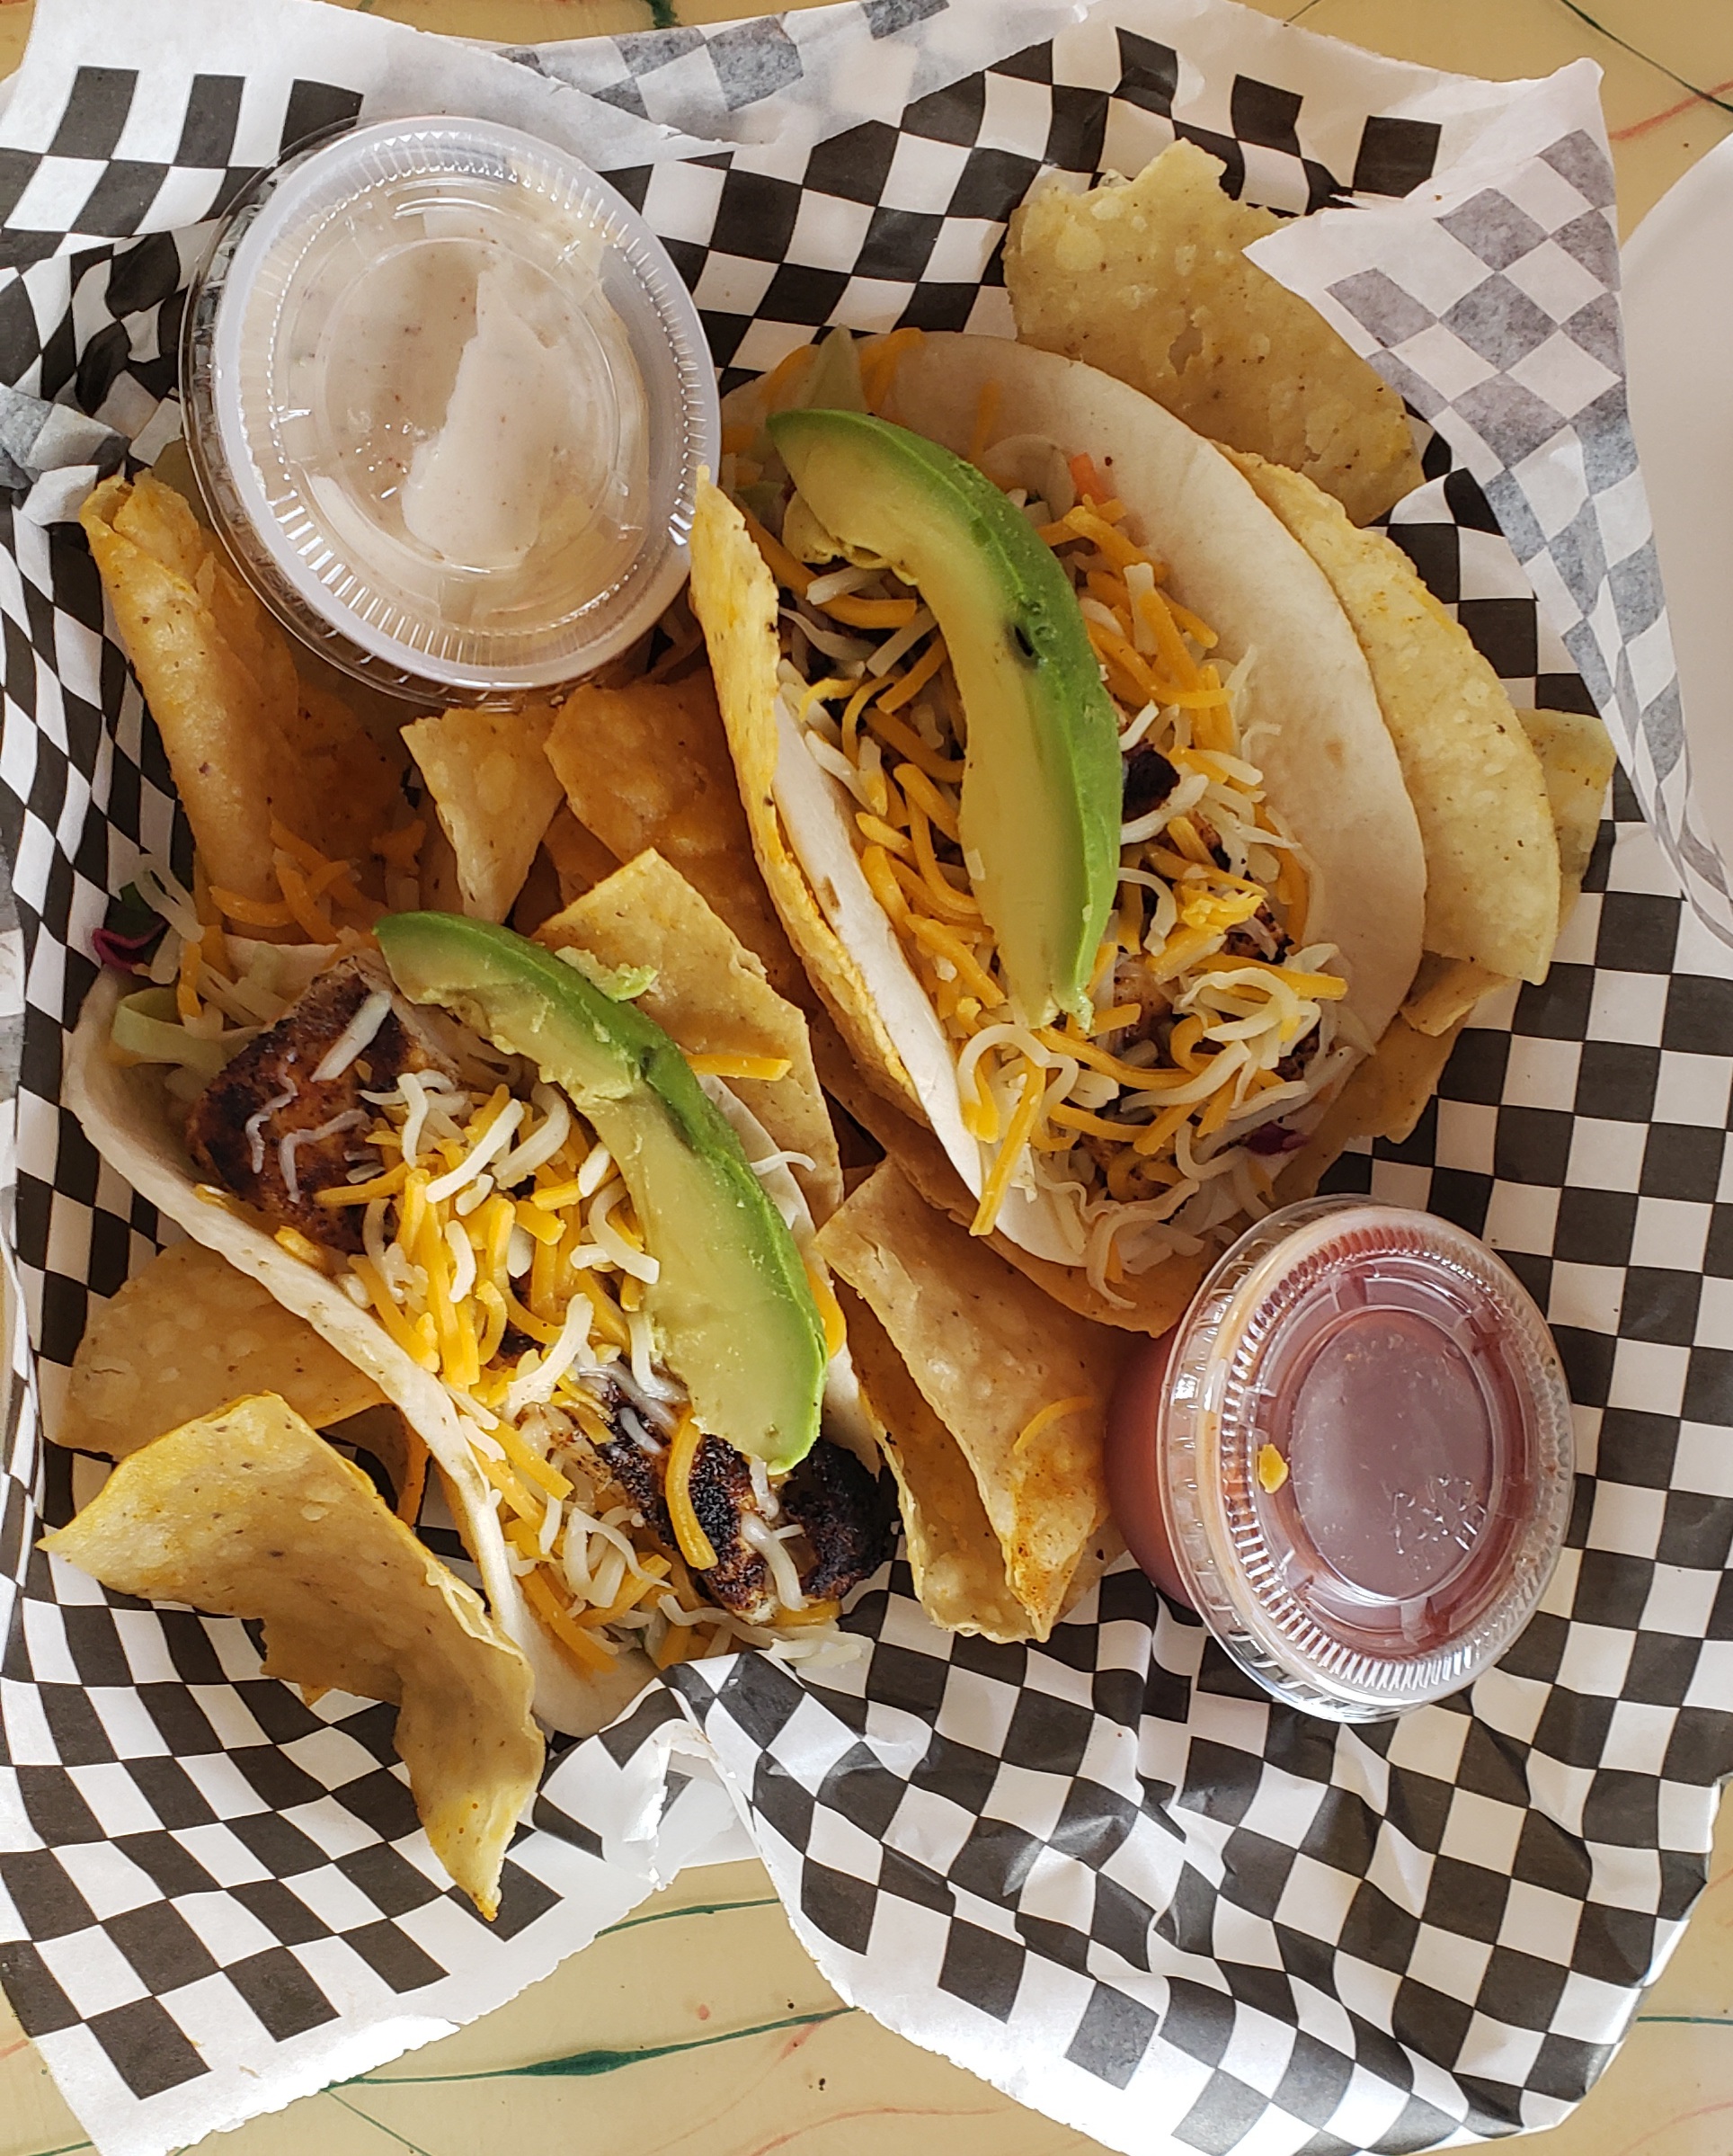 Blackened Mahi Tacos with Baja Sauce - $12.45